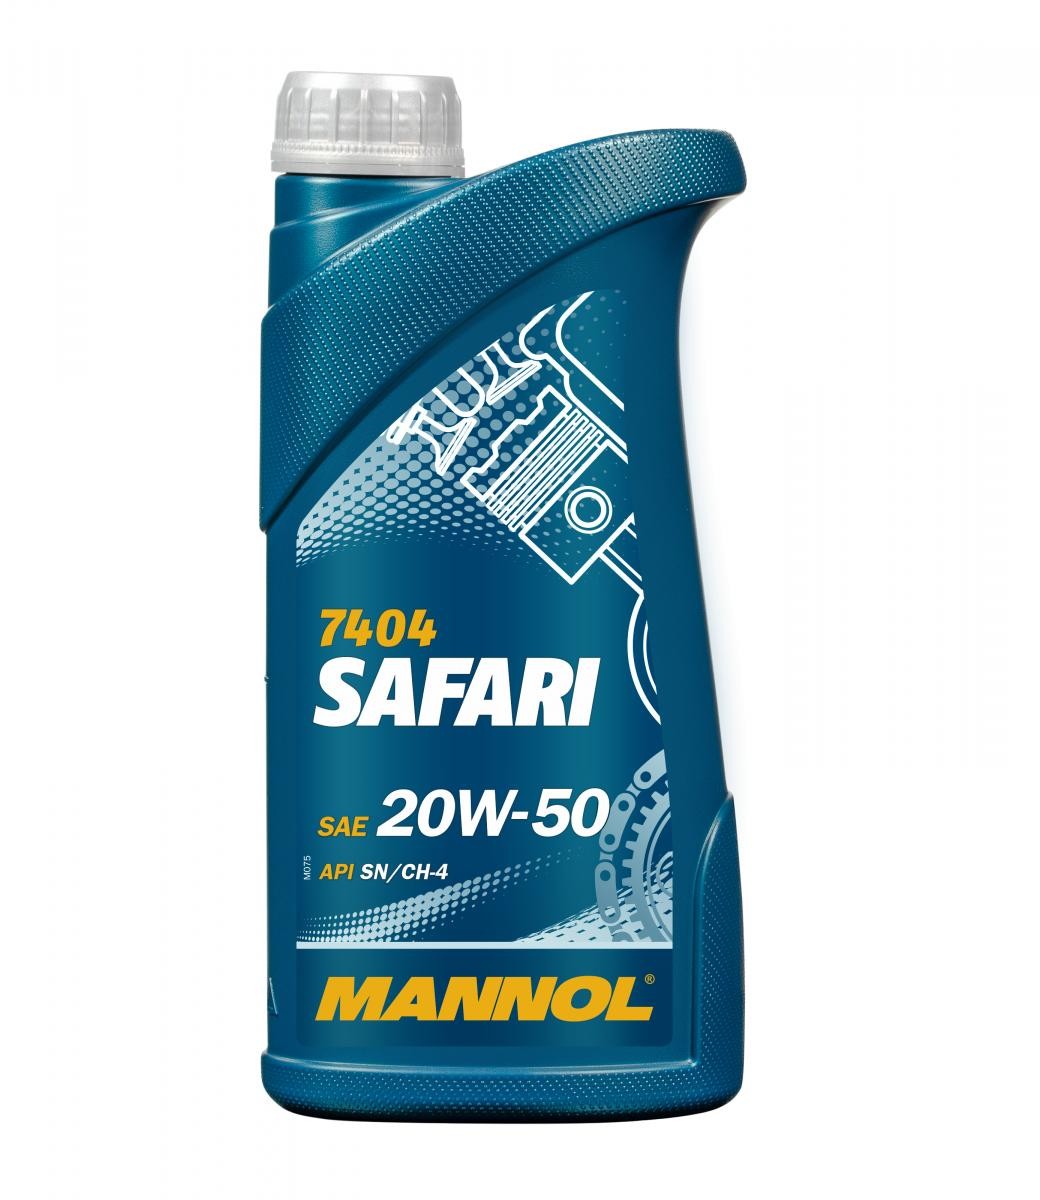 MANNOL SAFARI 20W-50, 1l, Mineral Oil Motor oil MN7404-1 buy